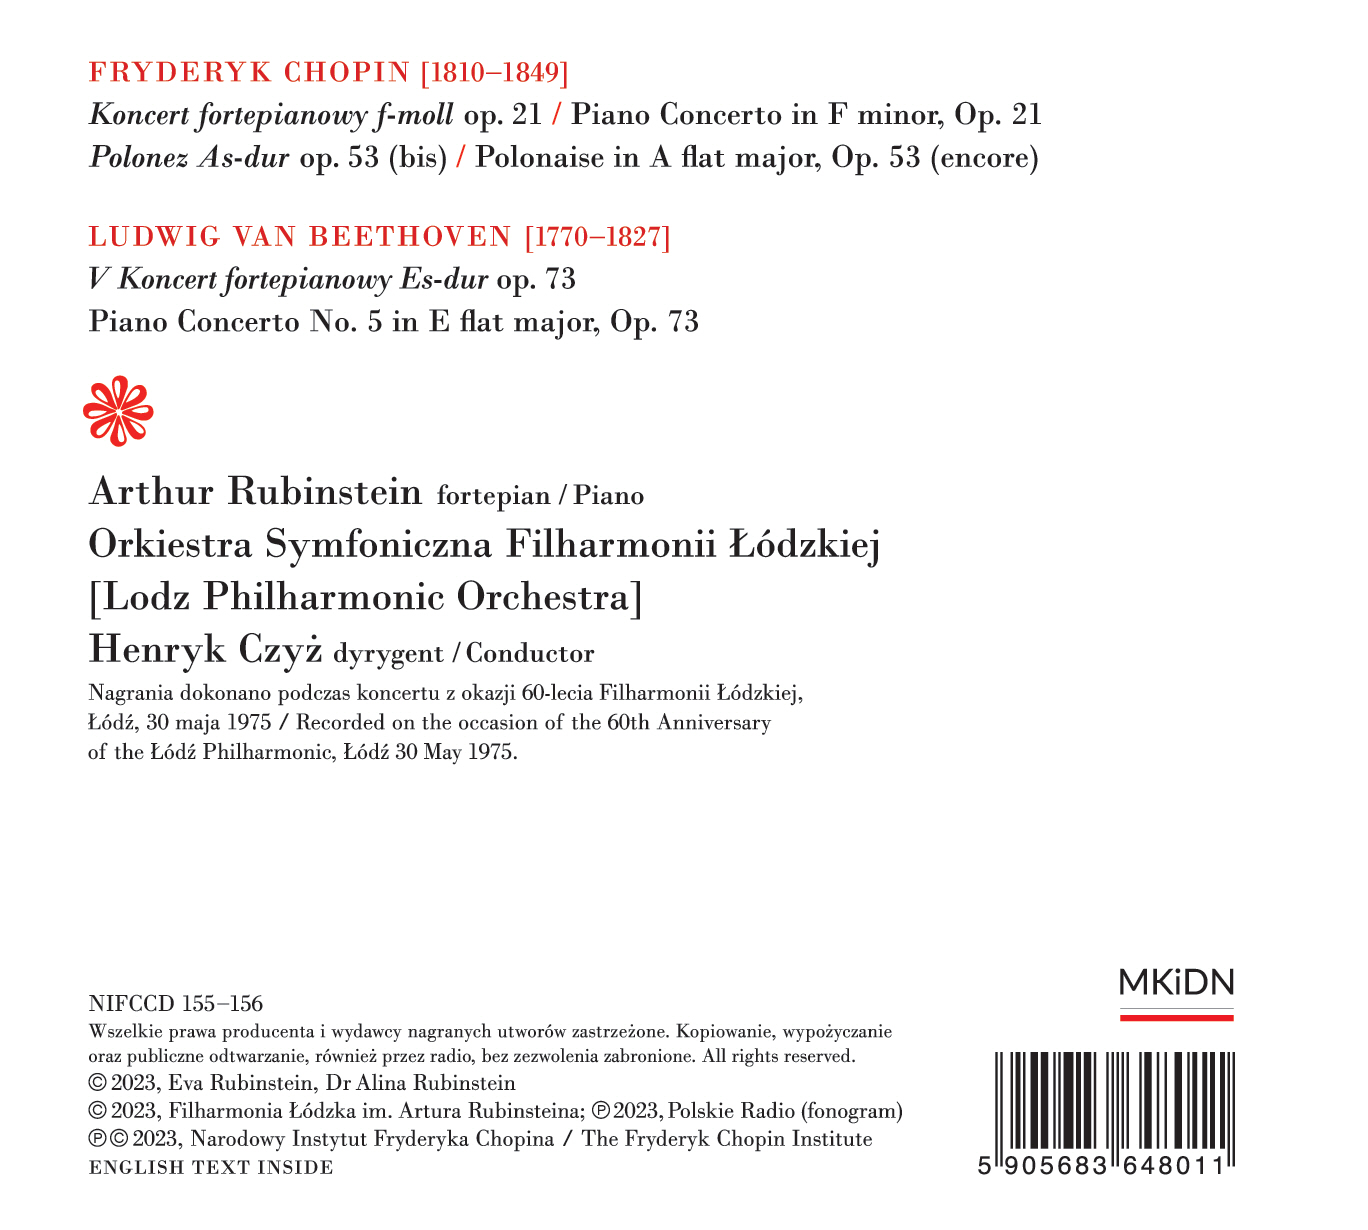 Artur Rubinstein 쇼팽: 피아노 협주곡 2번, 폴로네즈 / 베토벤: 피아노 협주곡 5번 `황제` (Last Concert in Poland - Chopin: Piano Concerto Op.21 / Beethoven: Piano Concerto Op.73)